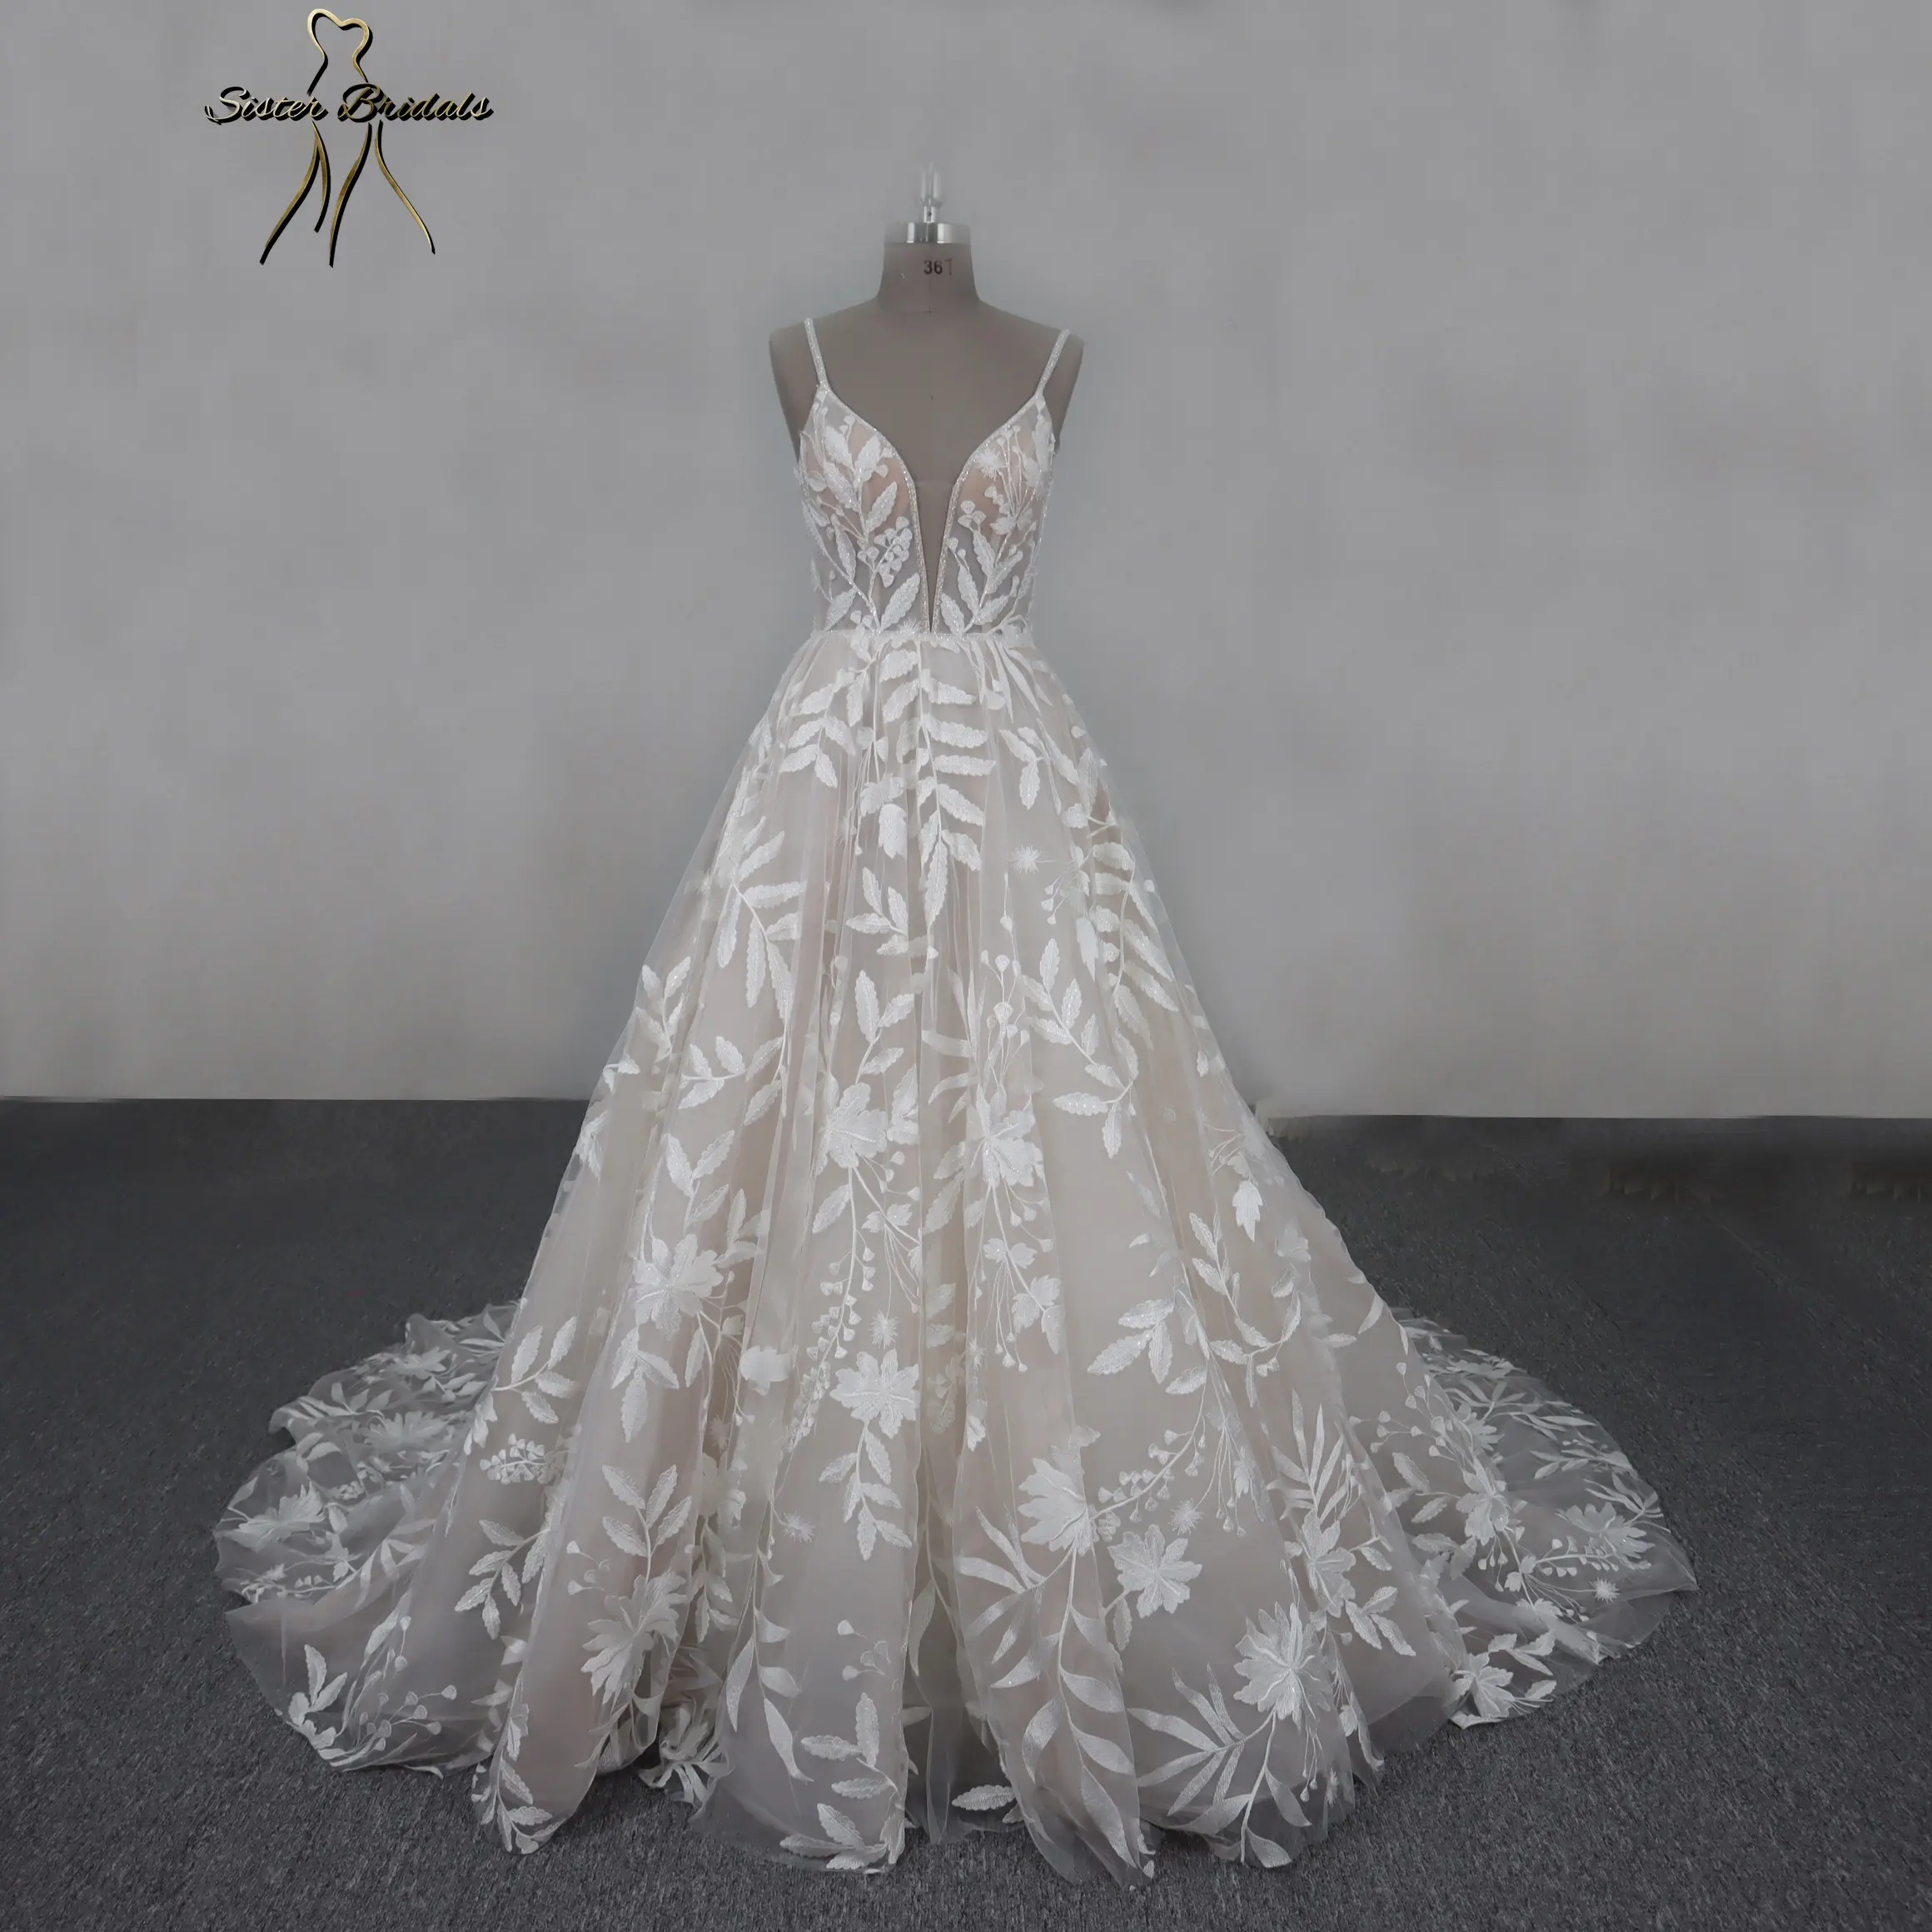 Bridal Gowns Weeding Dress Wedding Gown White Backless Anniversary Silk Beaded Luxury Wedding Dresses Woman Dress